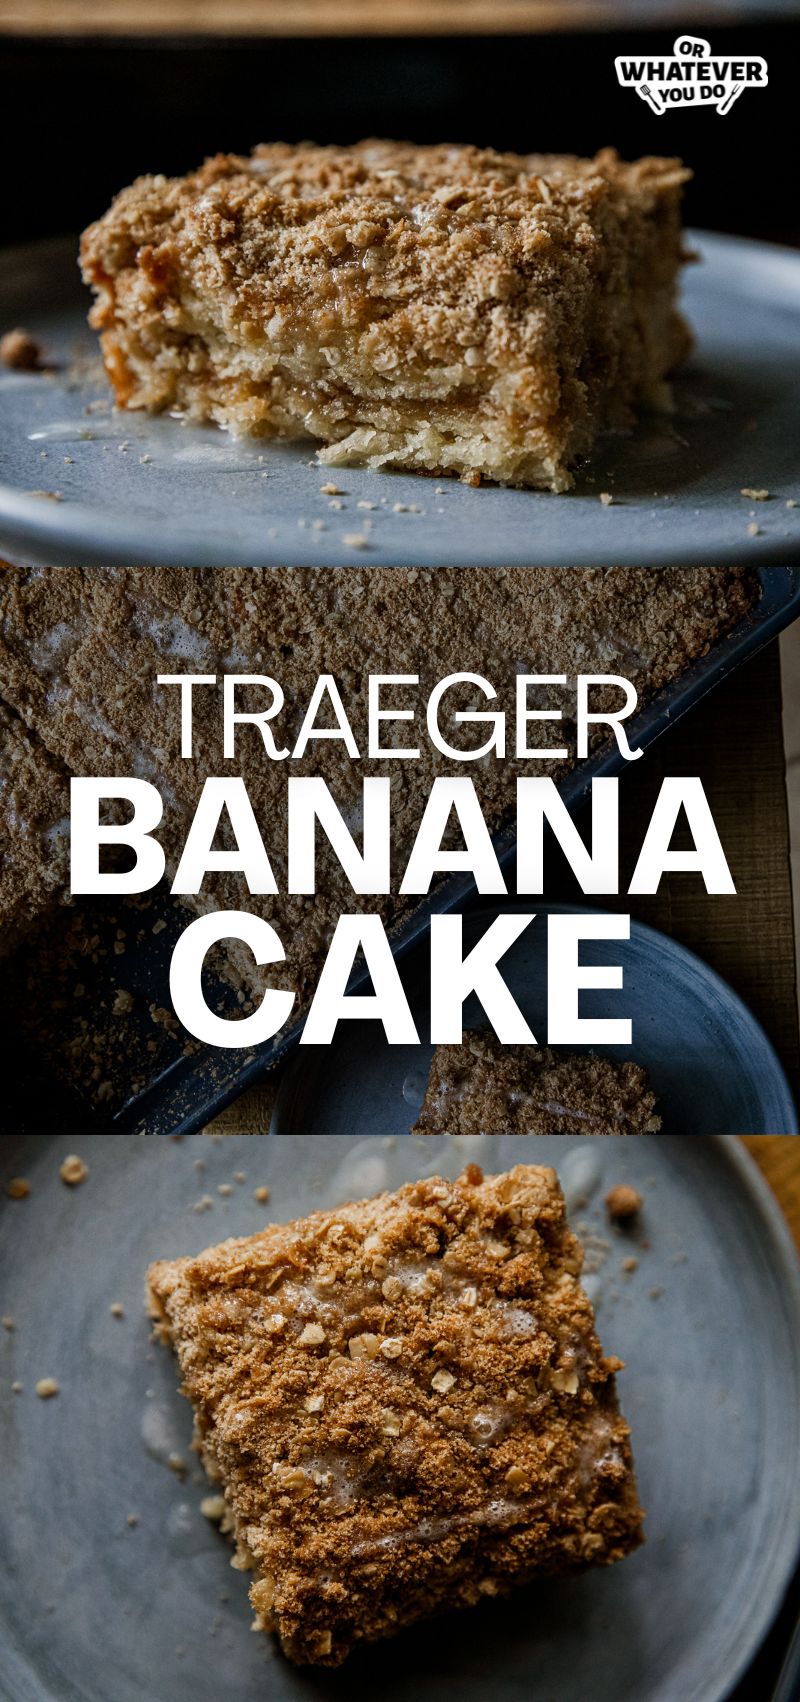 Traeger Banana Cake